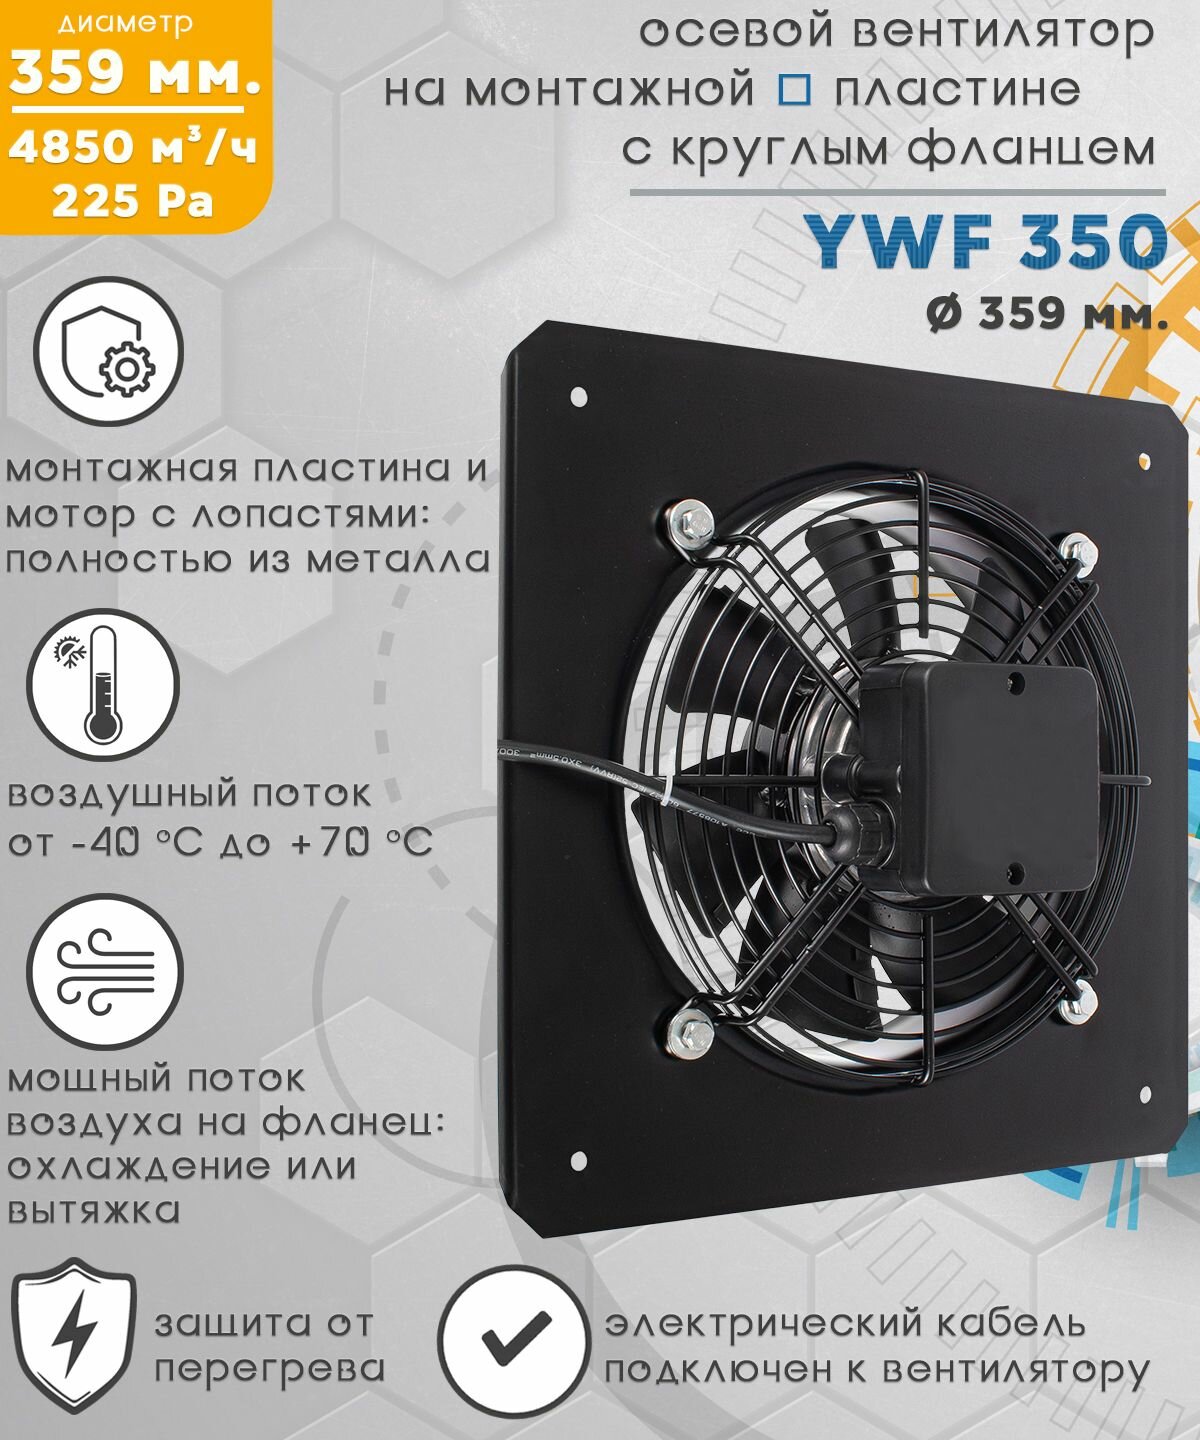 YWF-2E-350 вентилятор осевой с монтажной пластиной 4850 куб. м/ч. 225 Па, с фланцем диаметр 359 мм